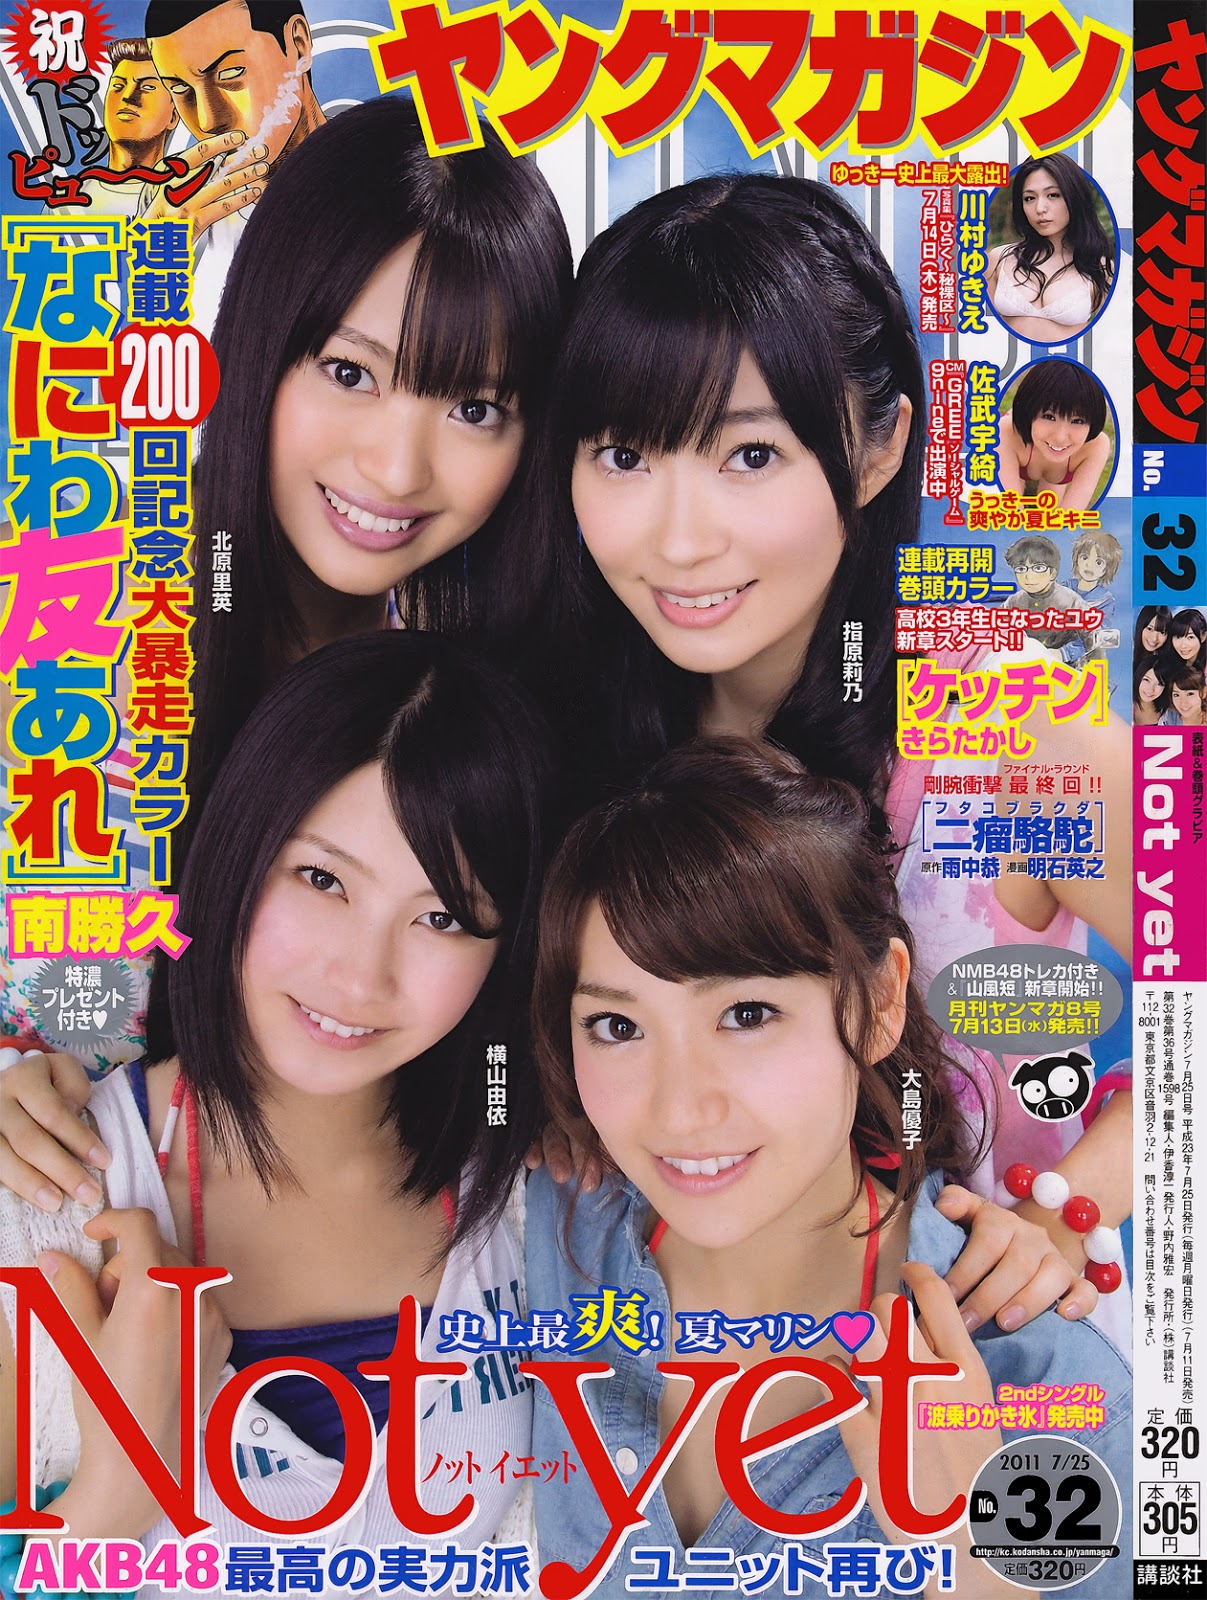 Young magazine. Журнал еще. Satake Uki. Юнано ноцу.